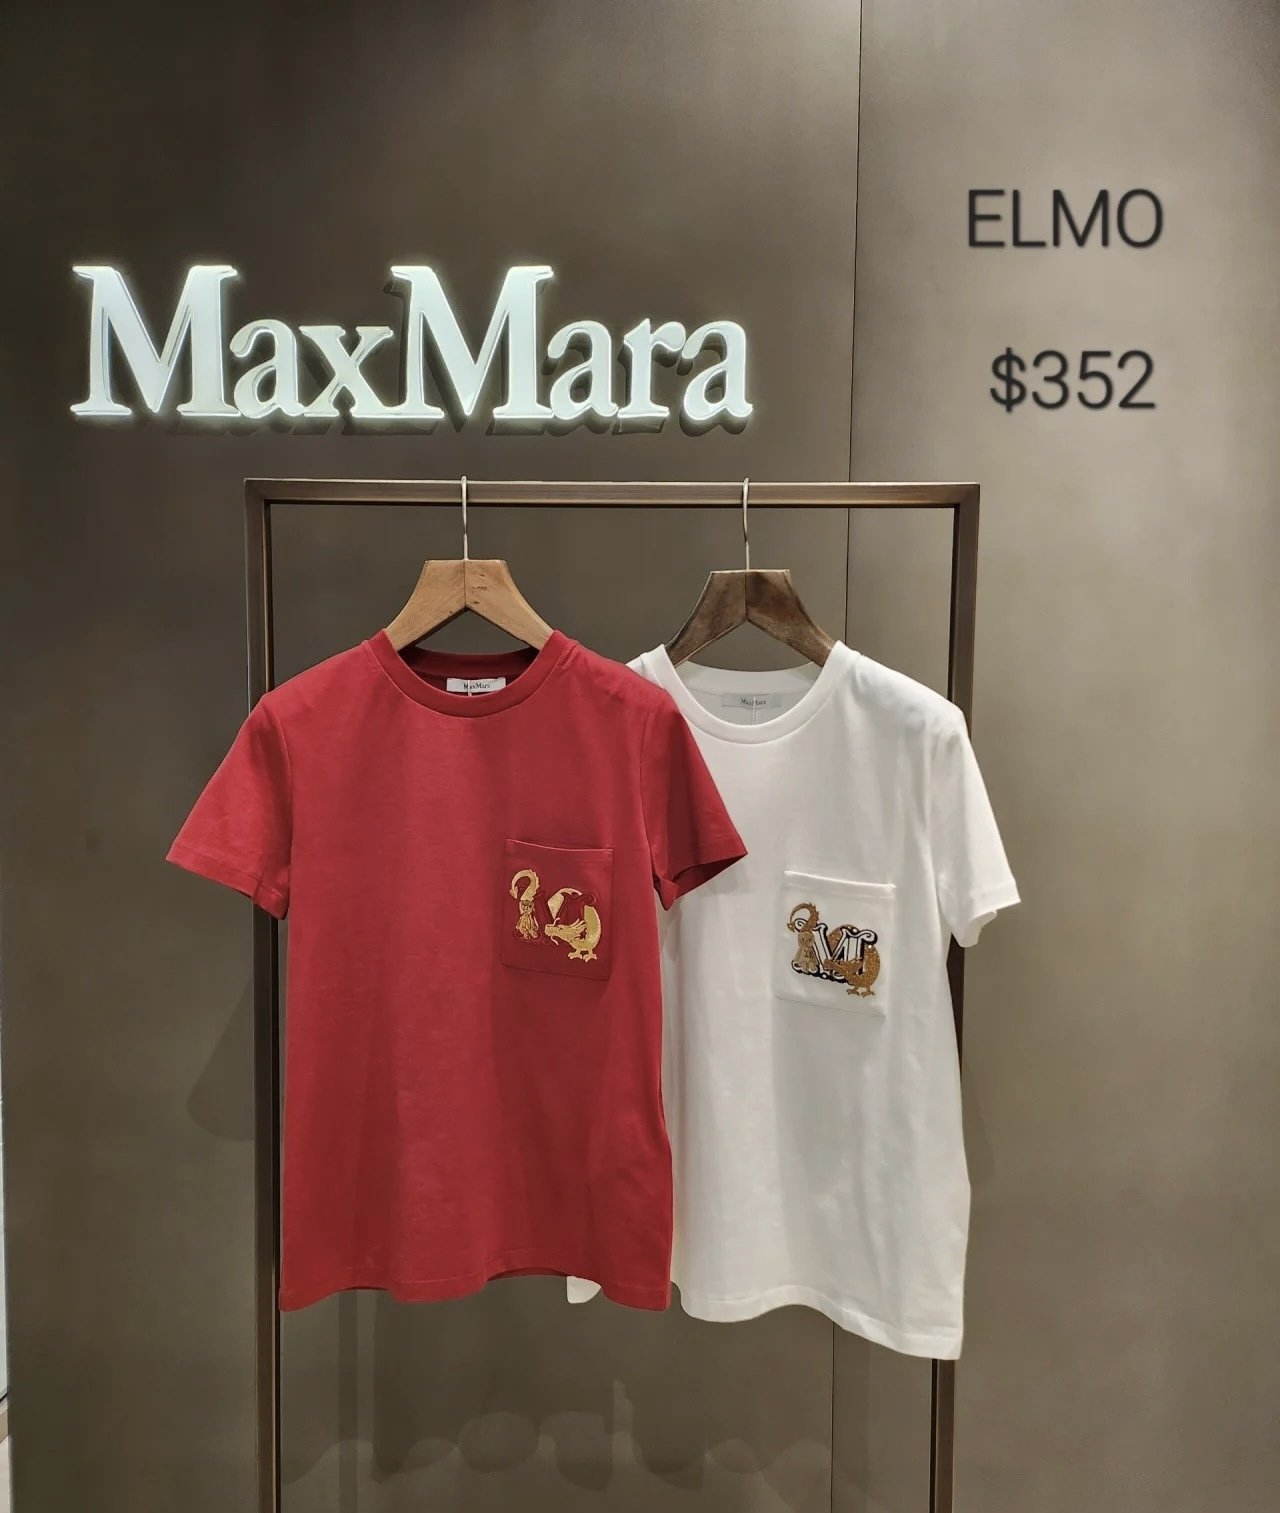 Max家龙年限定款T恤 亮片刺绣简约有质感 经典易搭配36-SD